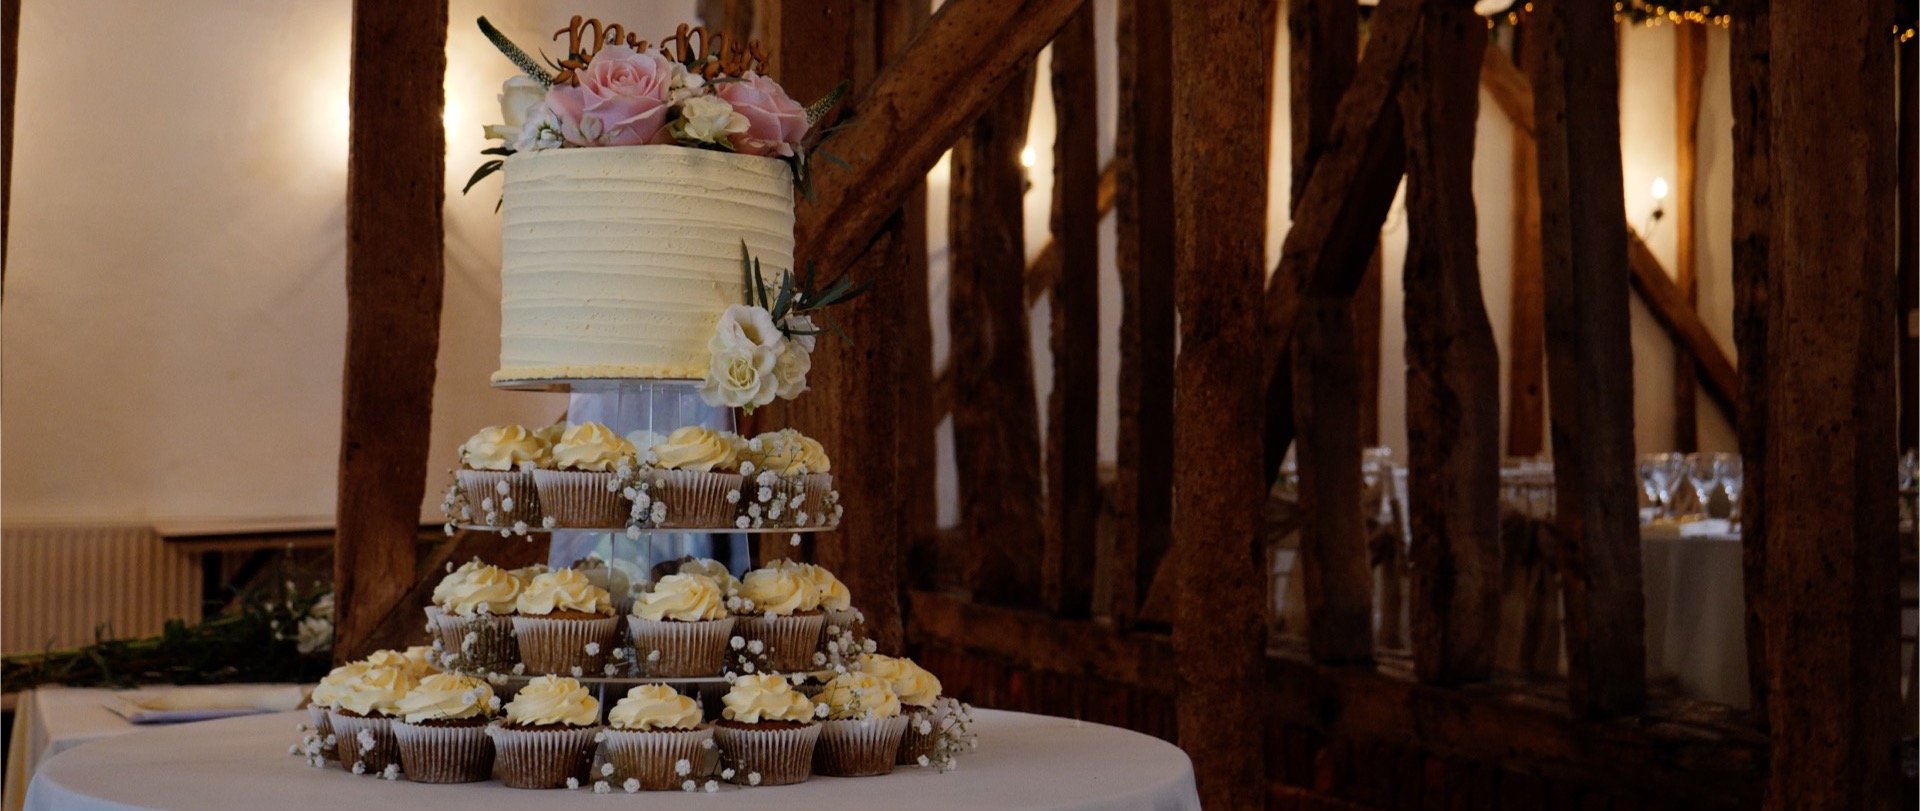 Crondon Park wedding cake video.jpg